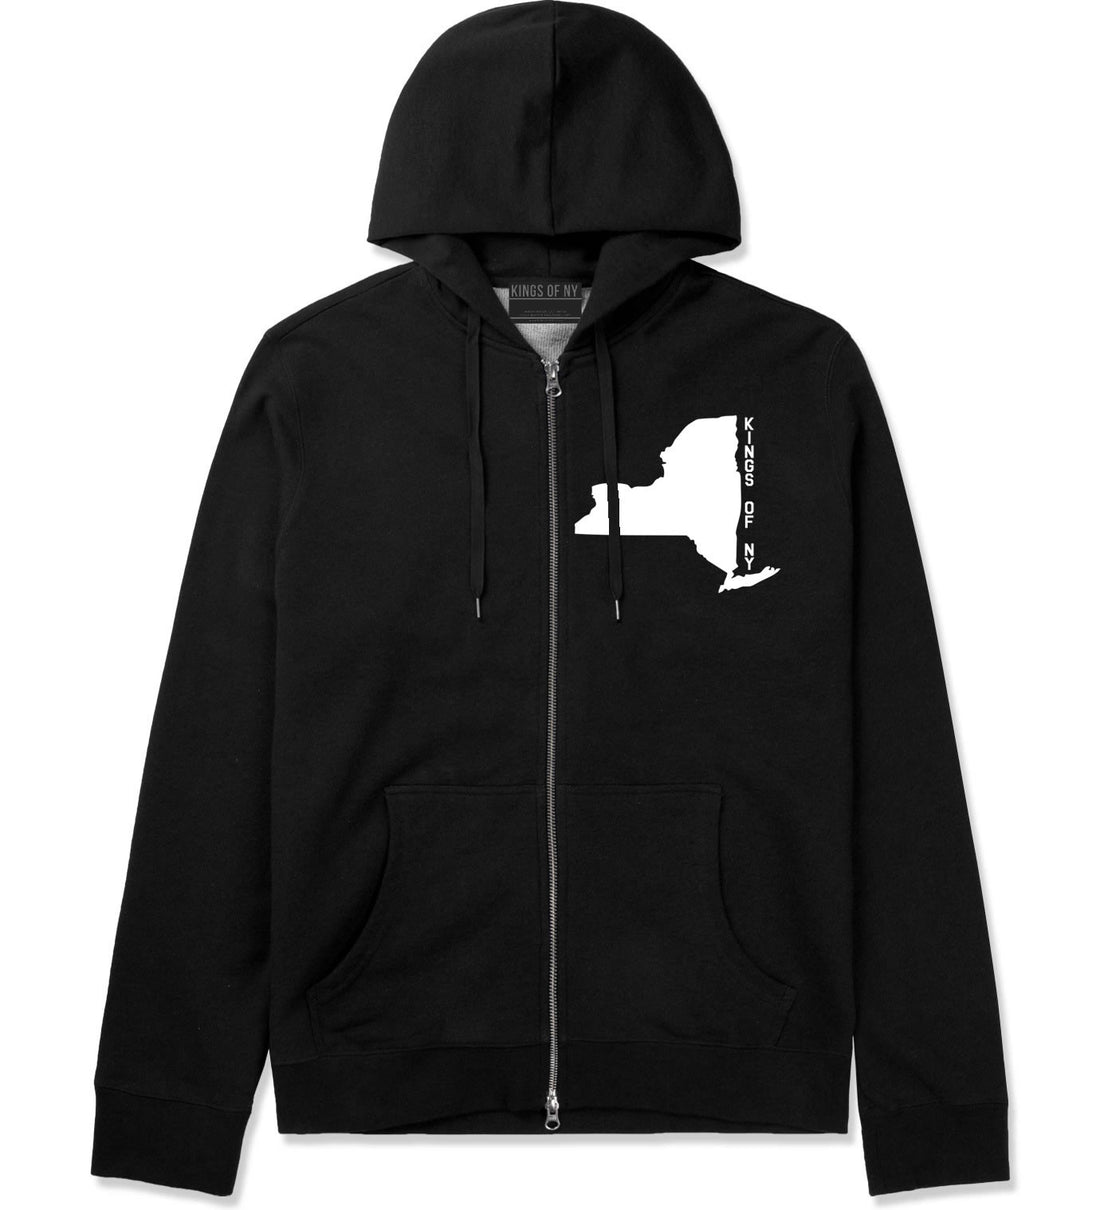 New York State Shape Zip Up Hoodie in Black By Kings Of NY